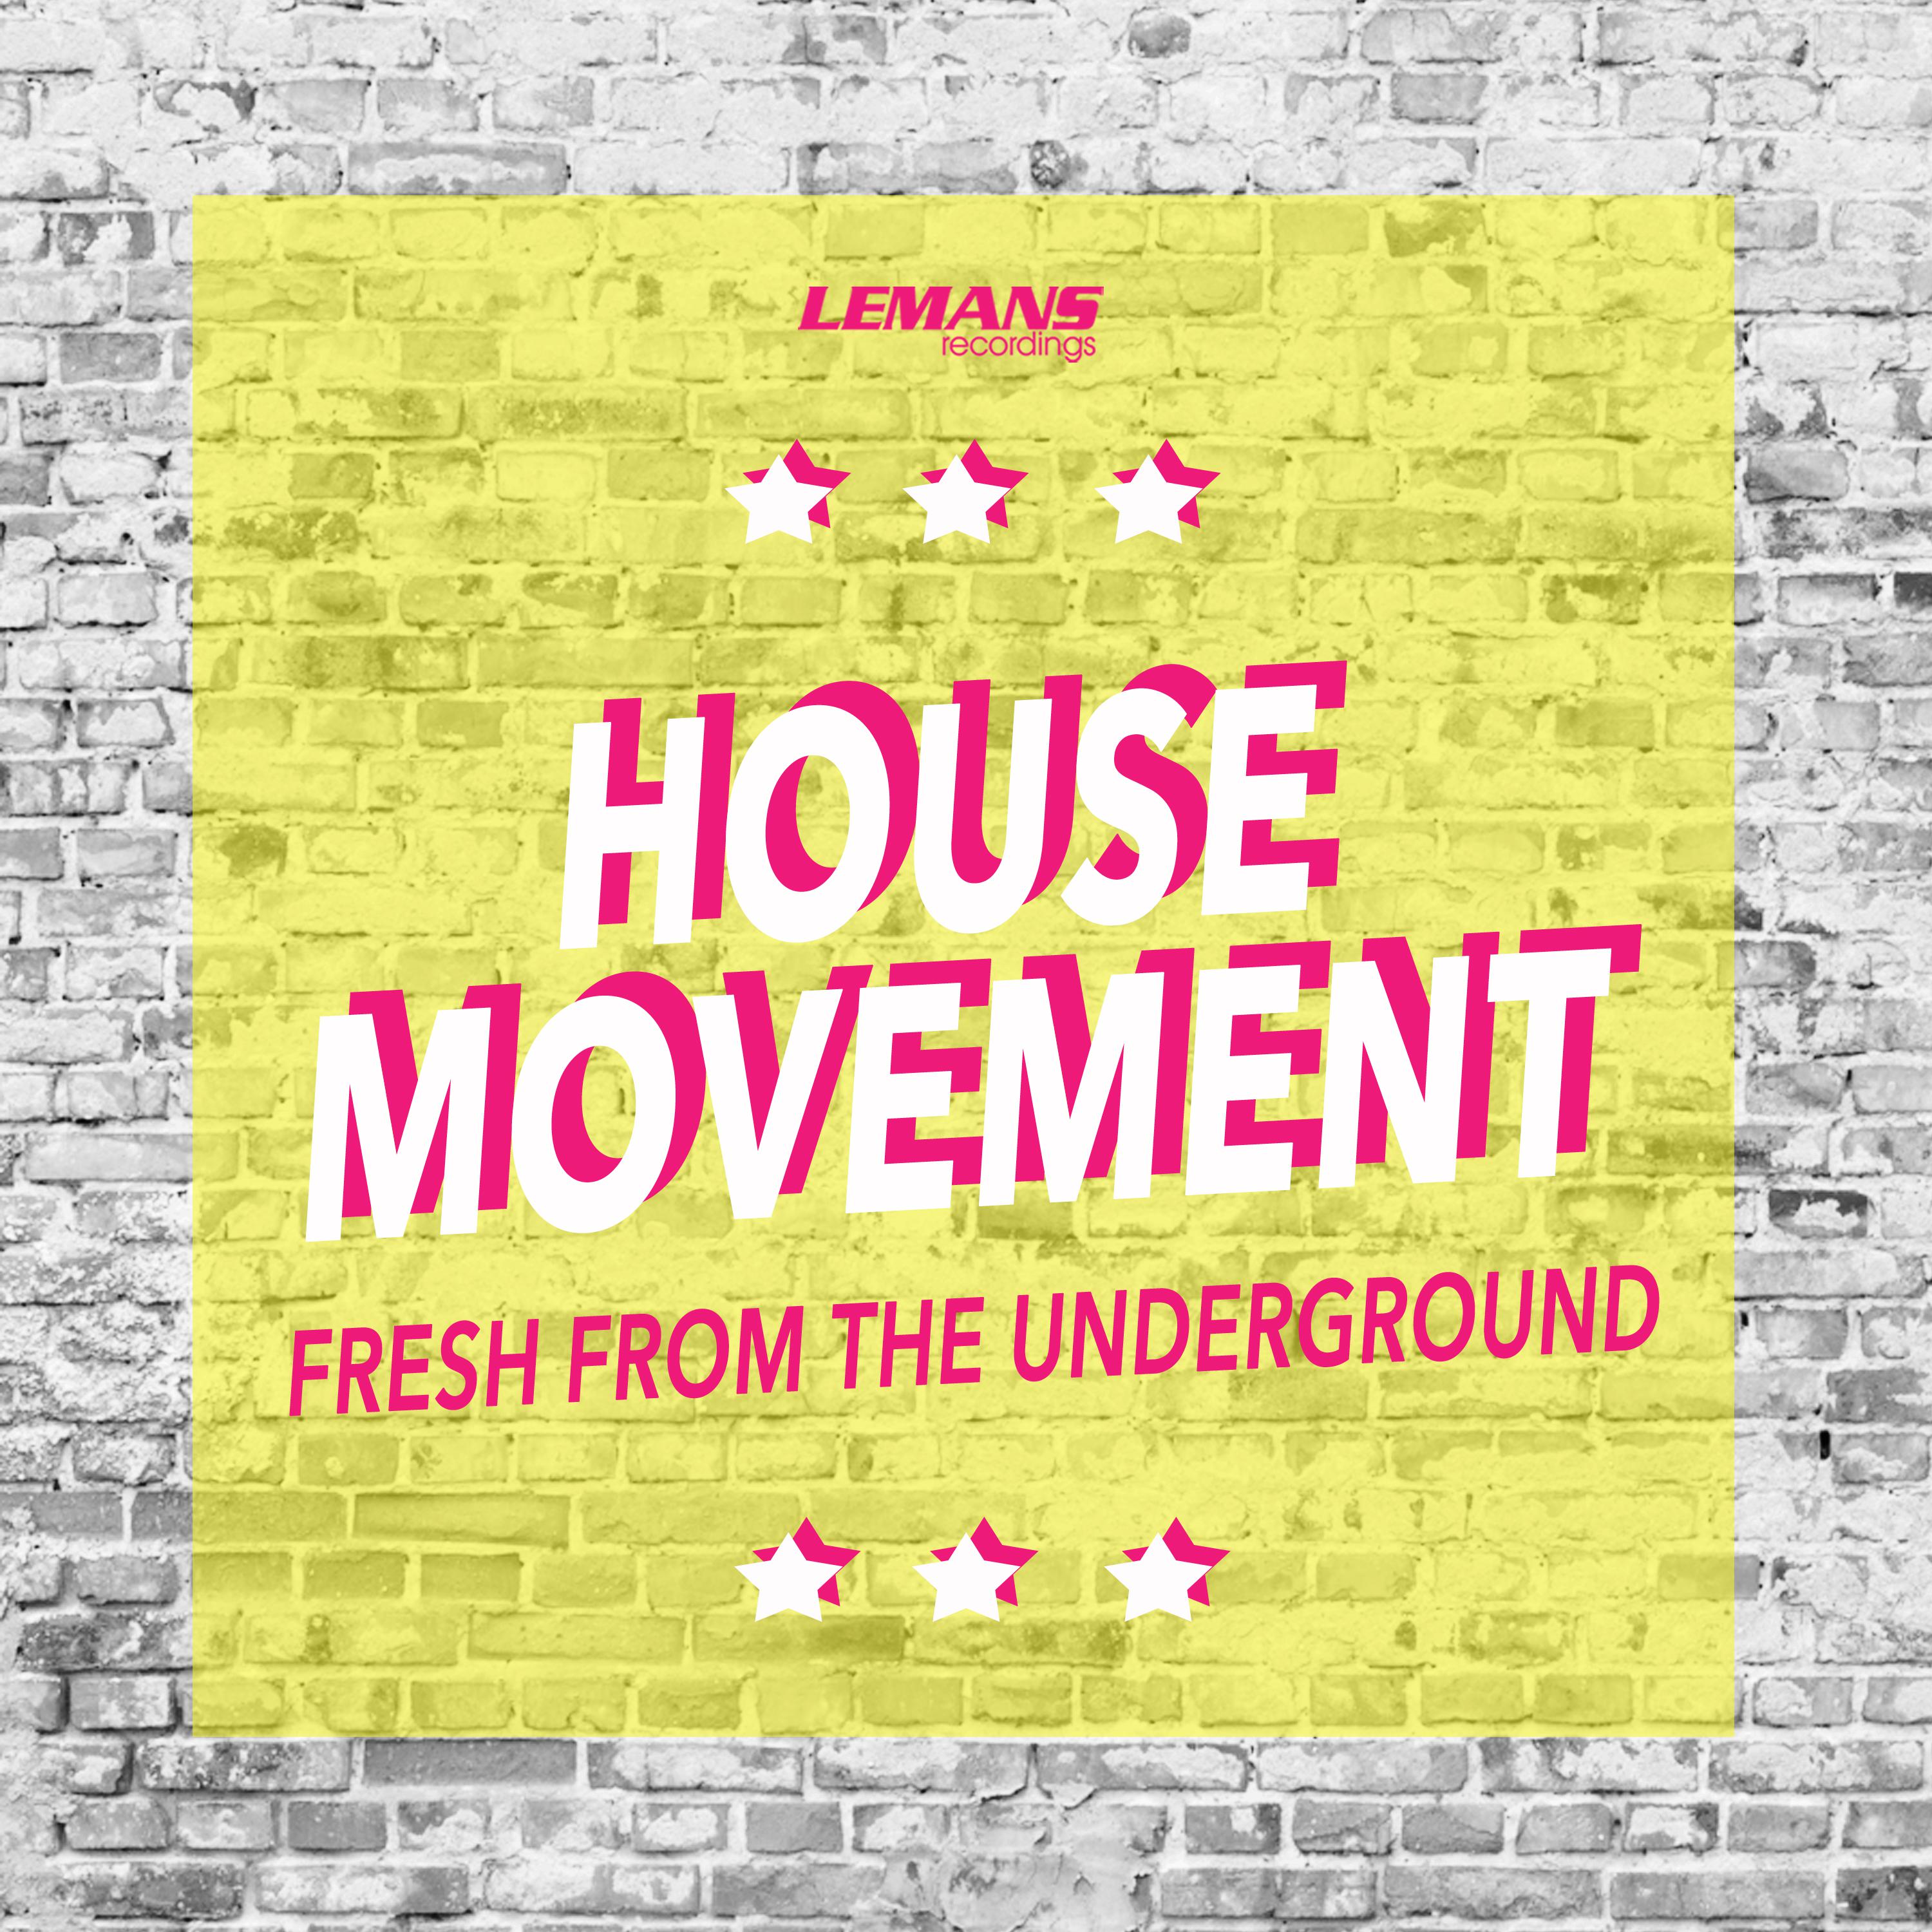 House Movement